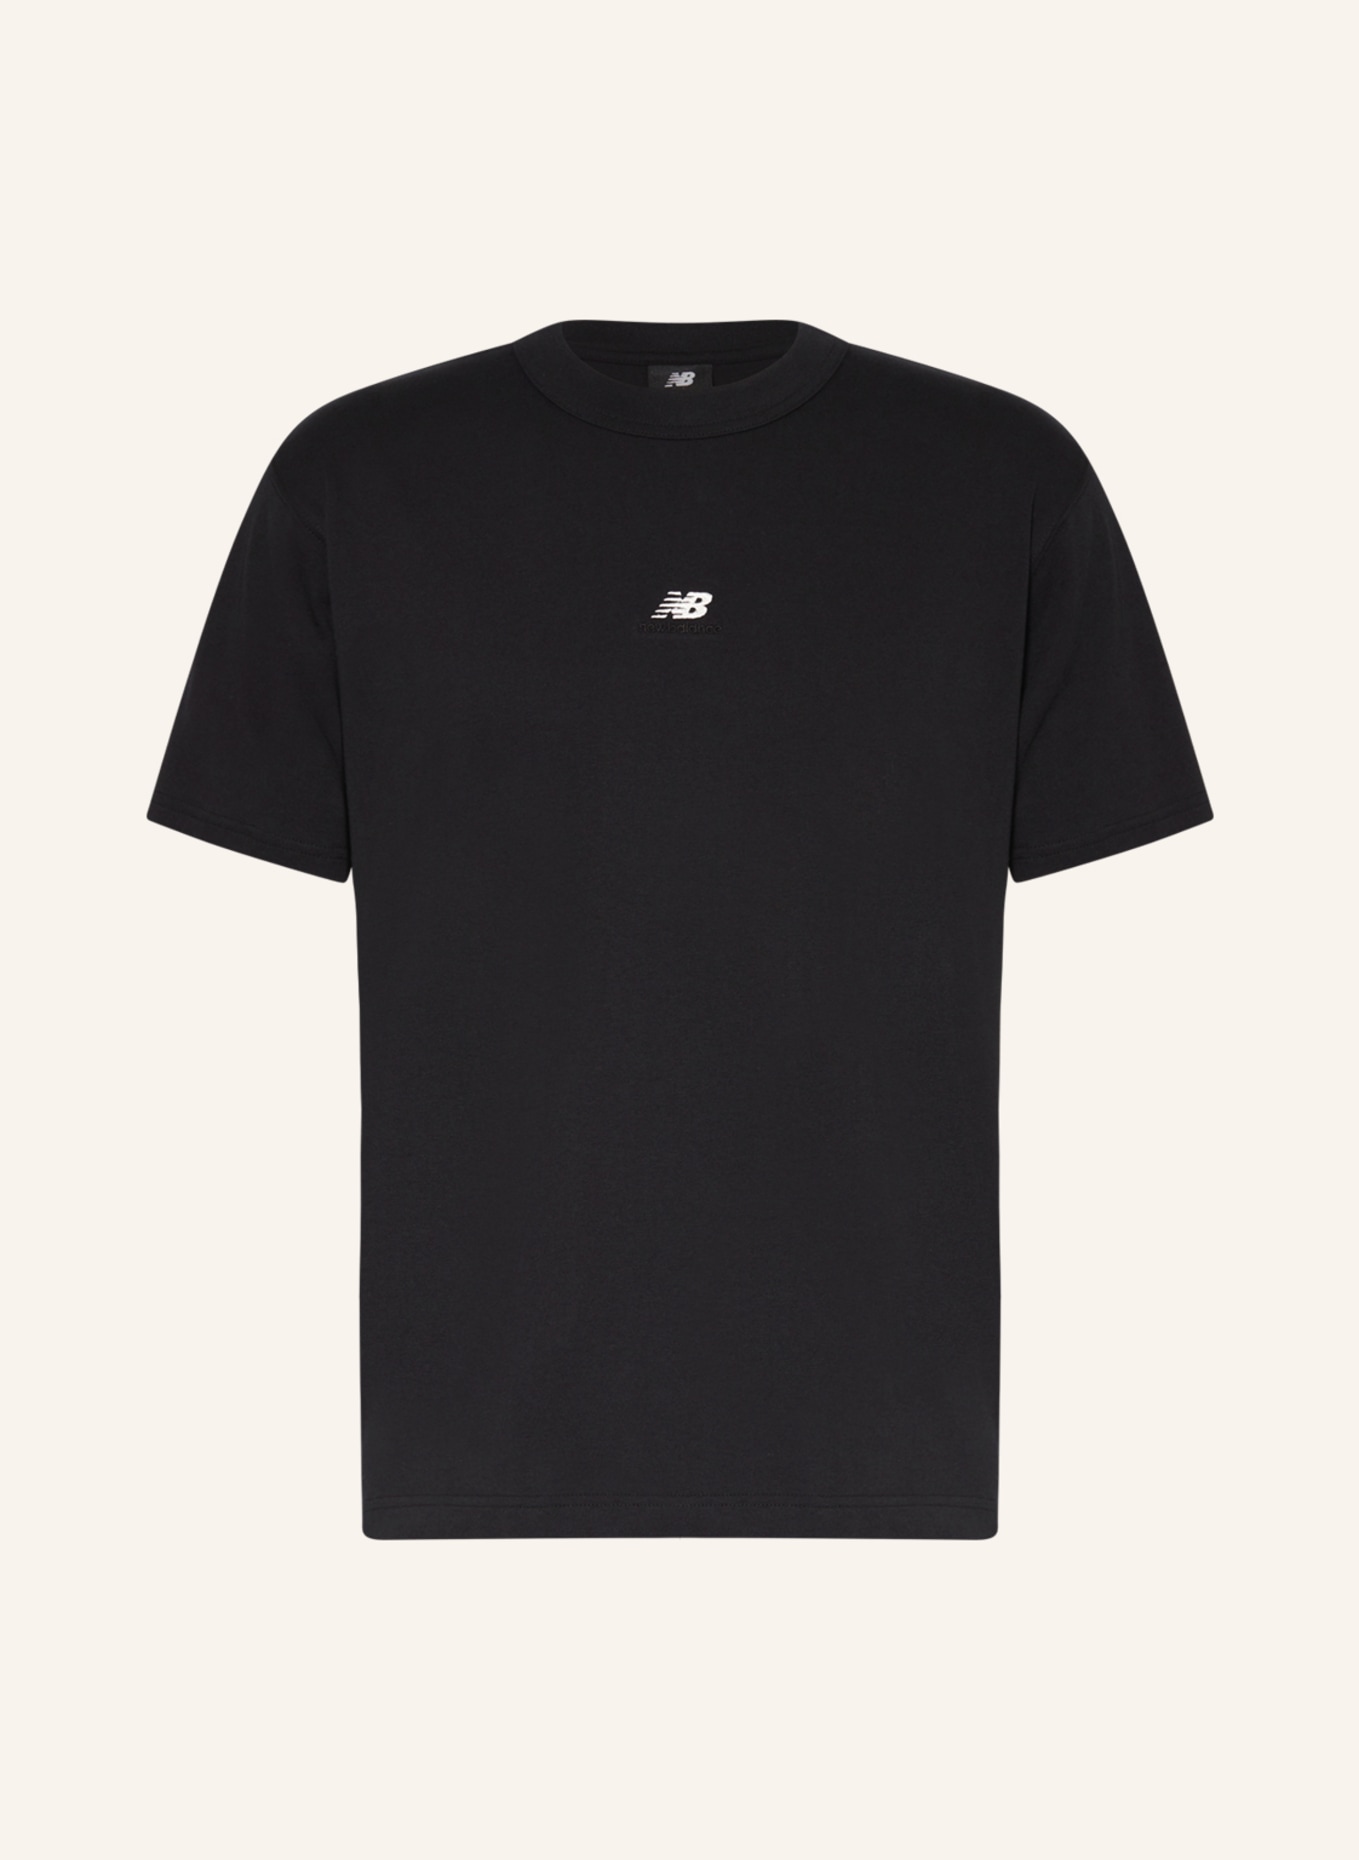 balance new ATHLETICS T-shirt black in GRAPHIC REMASTERED